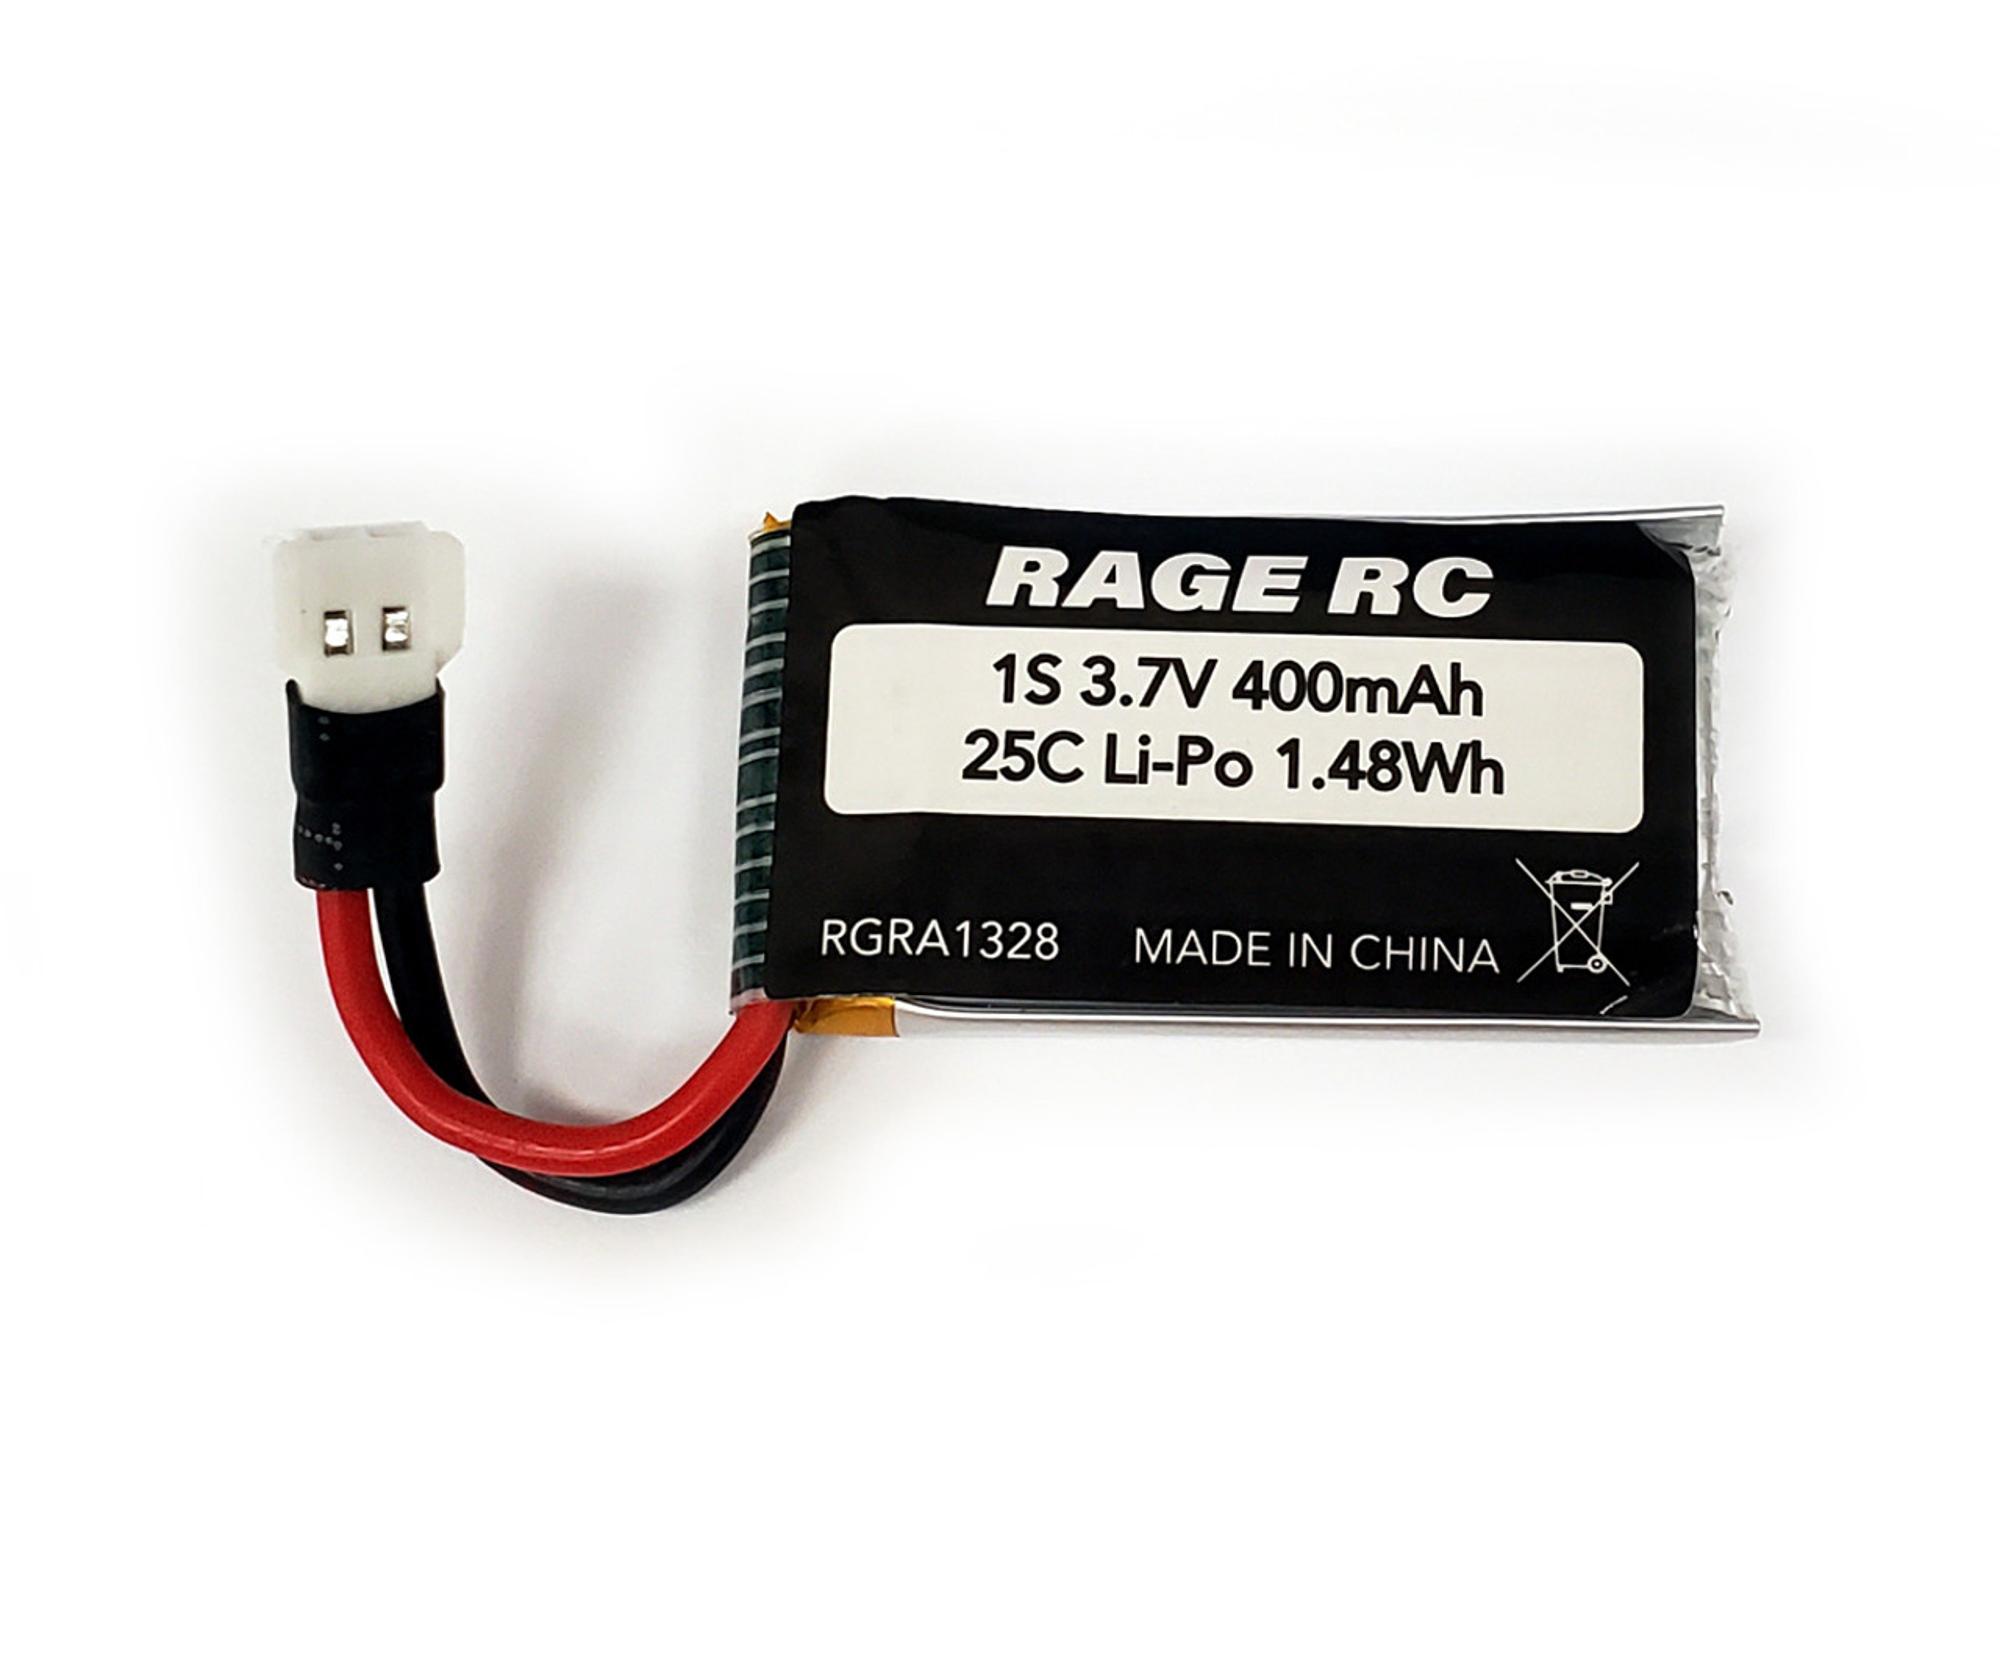 Rage RC 3.7v 400mAh LiPo Battery for Rage Micro Airplanes